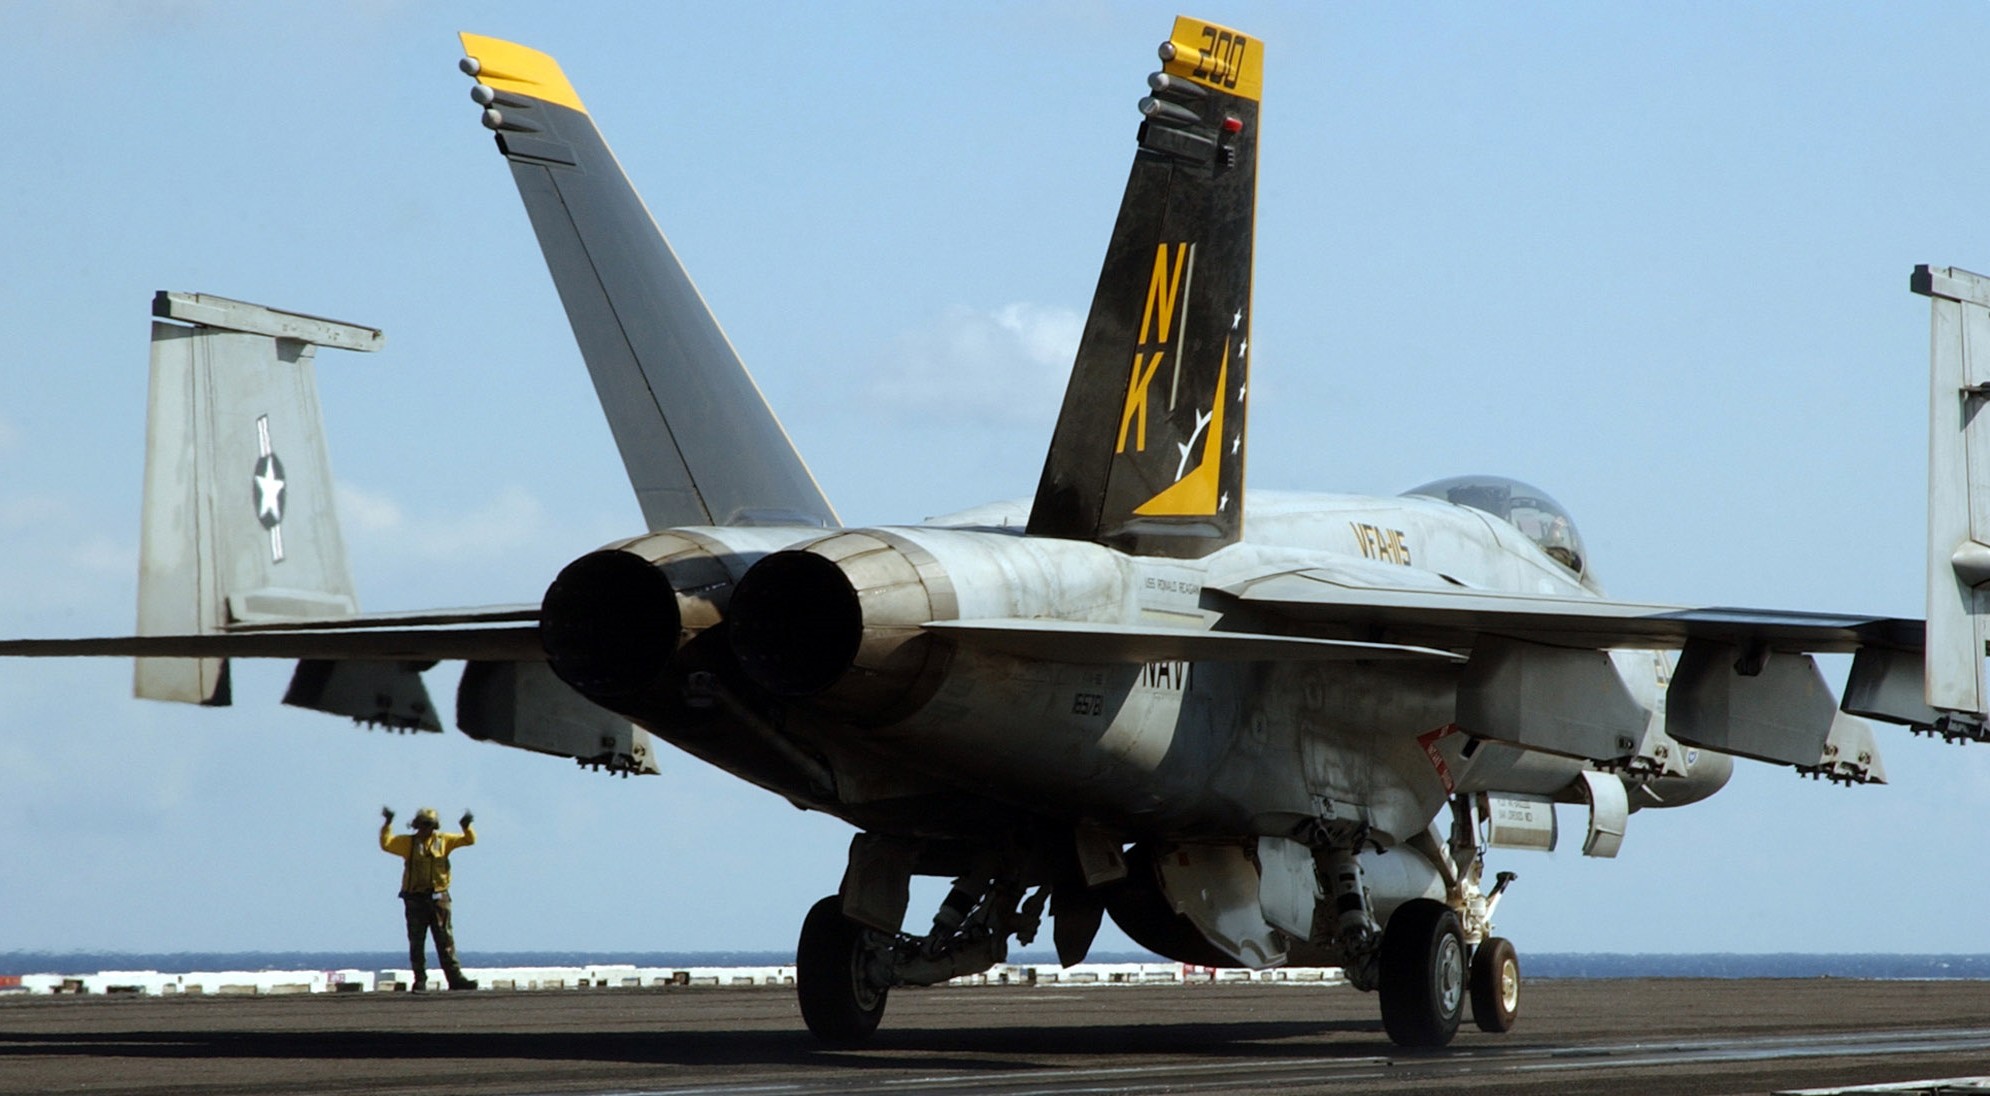 vfa-115 eagles strike fighter squadron f/a-18e super hornet carrier air wing cvw-14 uss ronald reagan cvn-76 2006 50